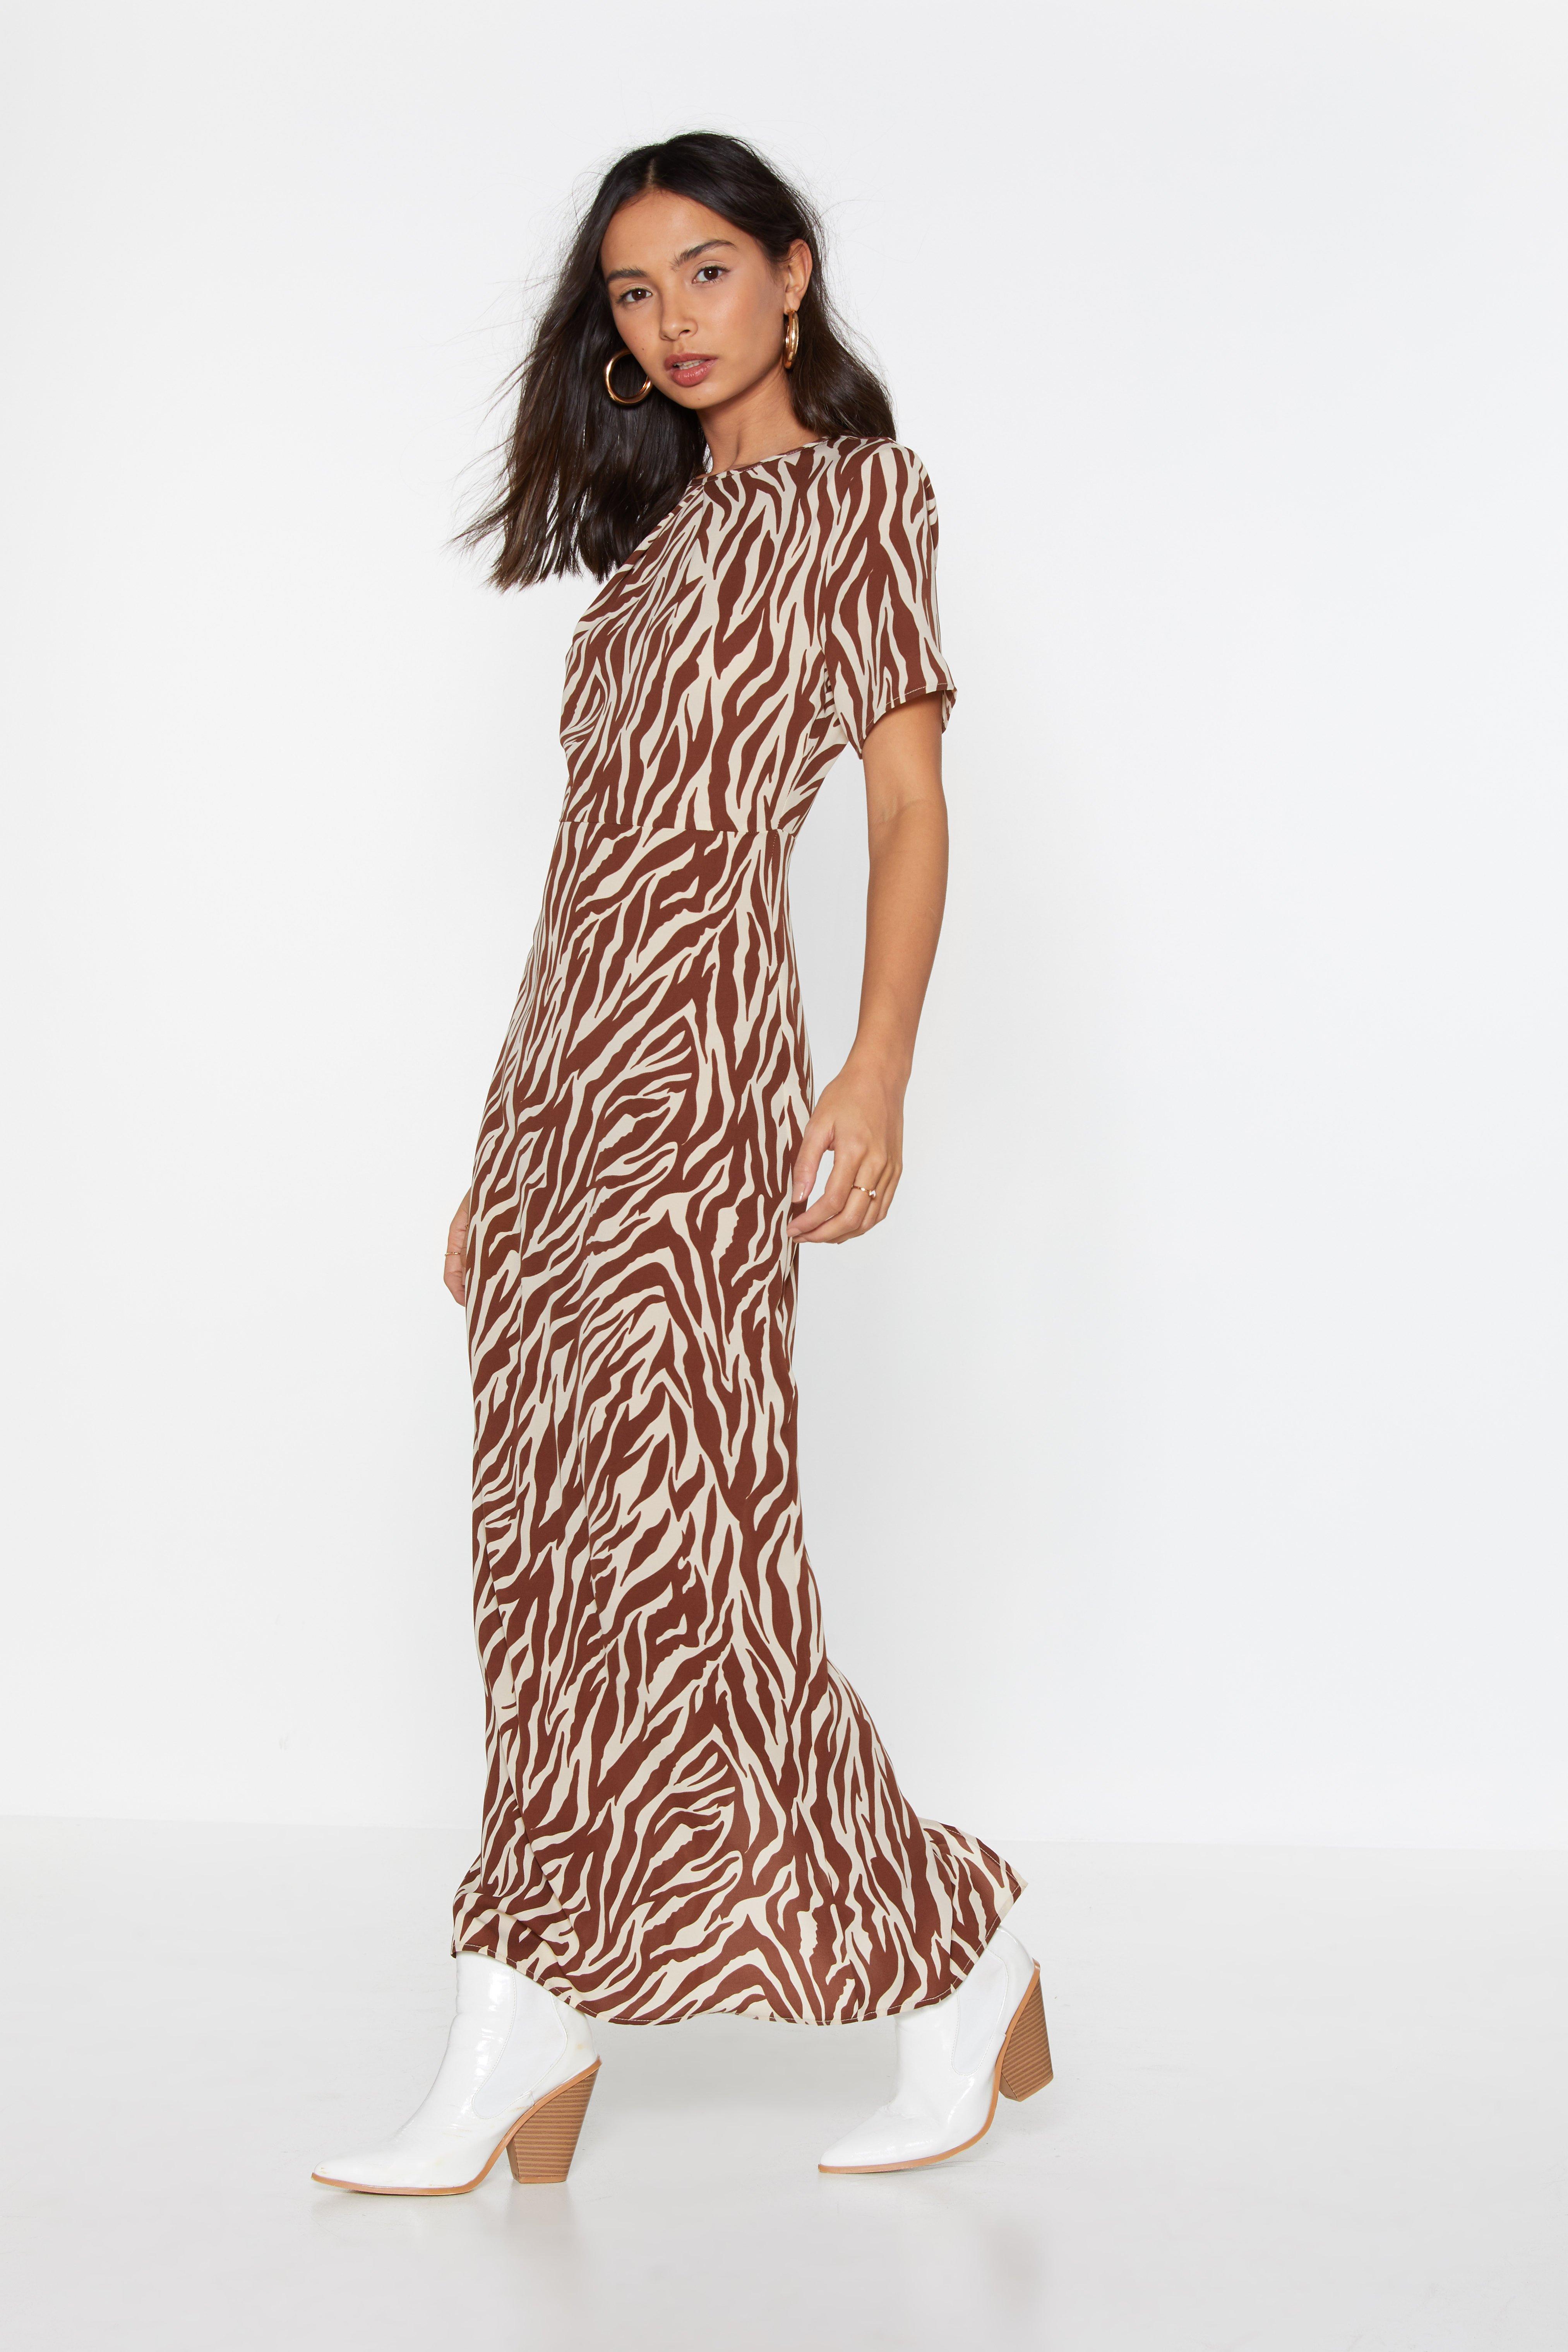 Brown Wild Zebra Print maxi modest dress